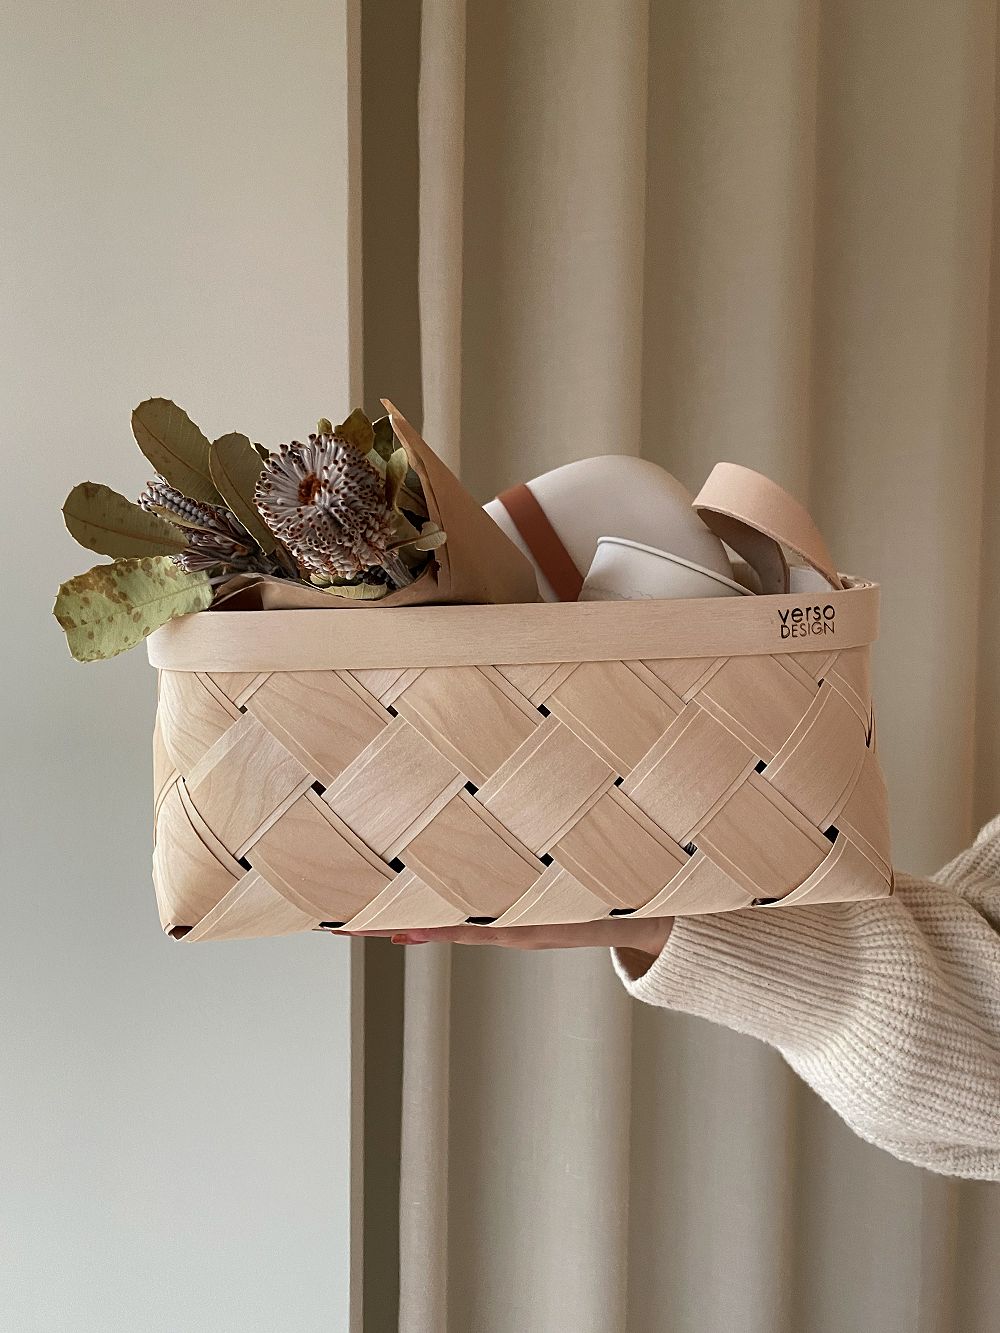 Marimekko Marimade takeaway mug and box in a Lastu basket by Verso Design